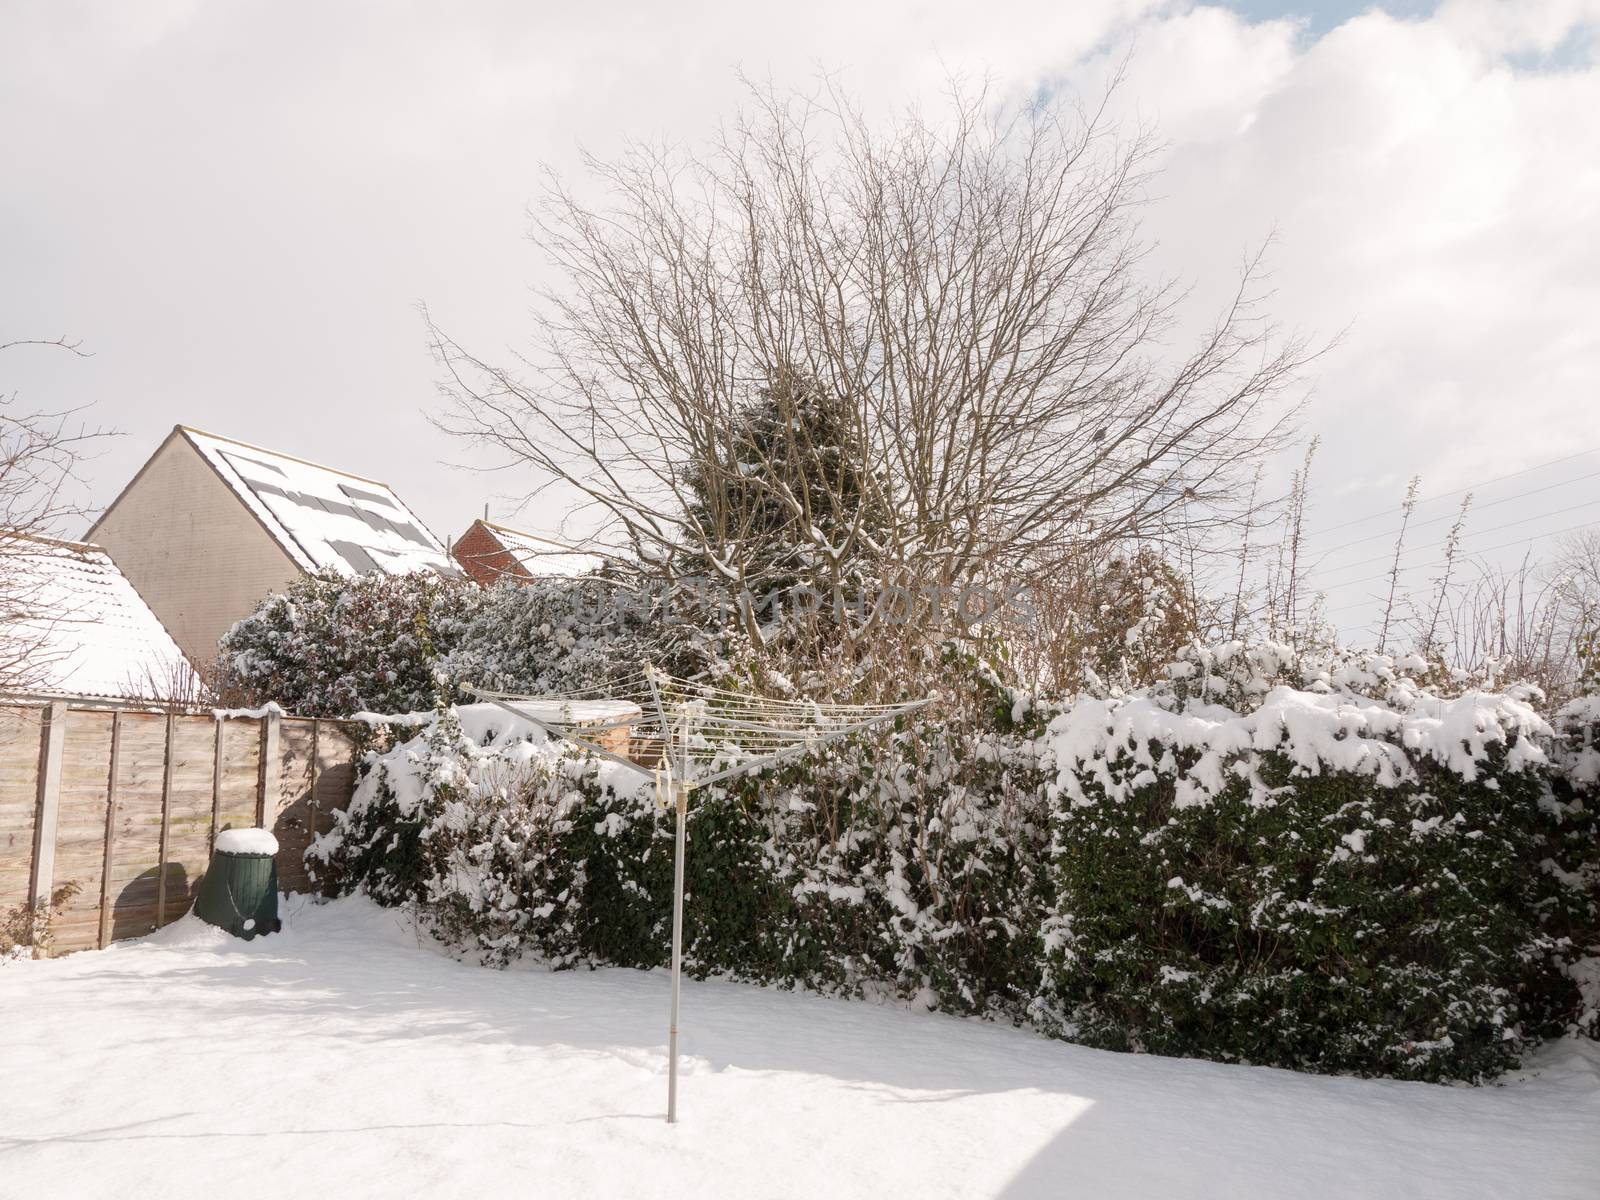 white snow covering back garden hedge tree ; essex; england; uk